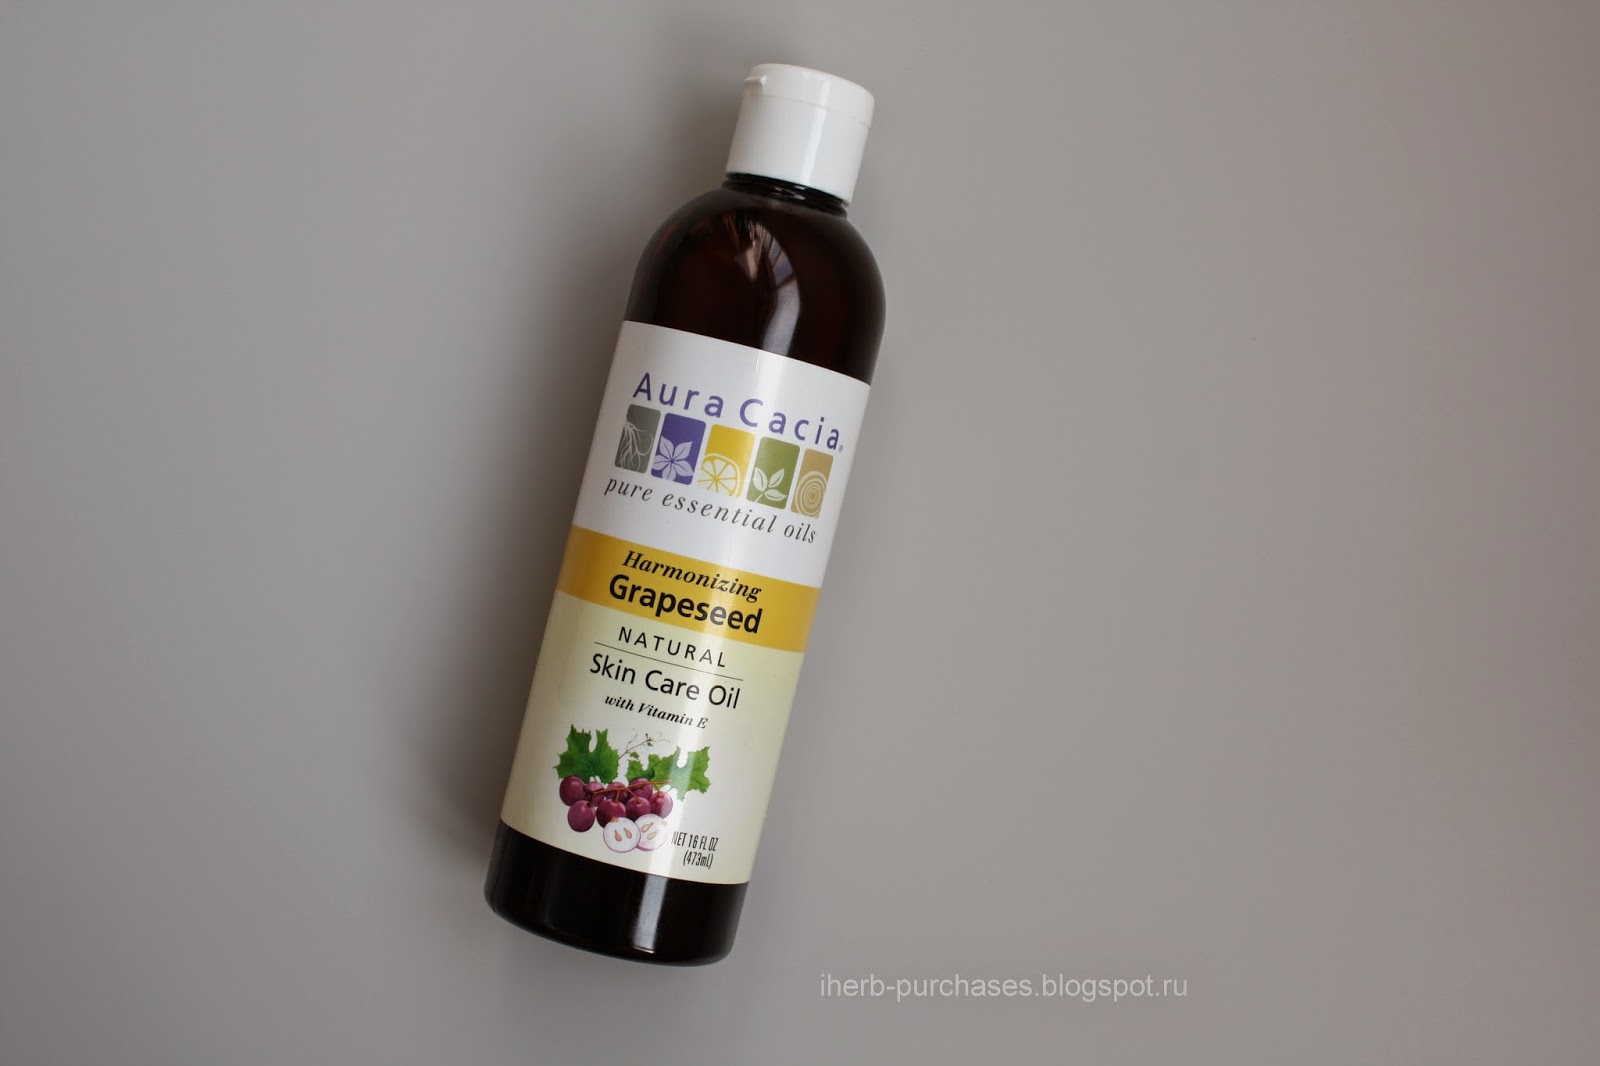 Aura Cacia, Natural Skin Care Oil, Harmonizing Grapeseed, 16 fl oz (473 ml)